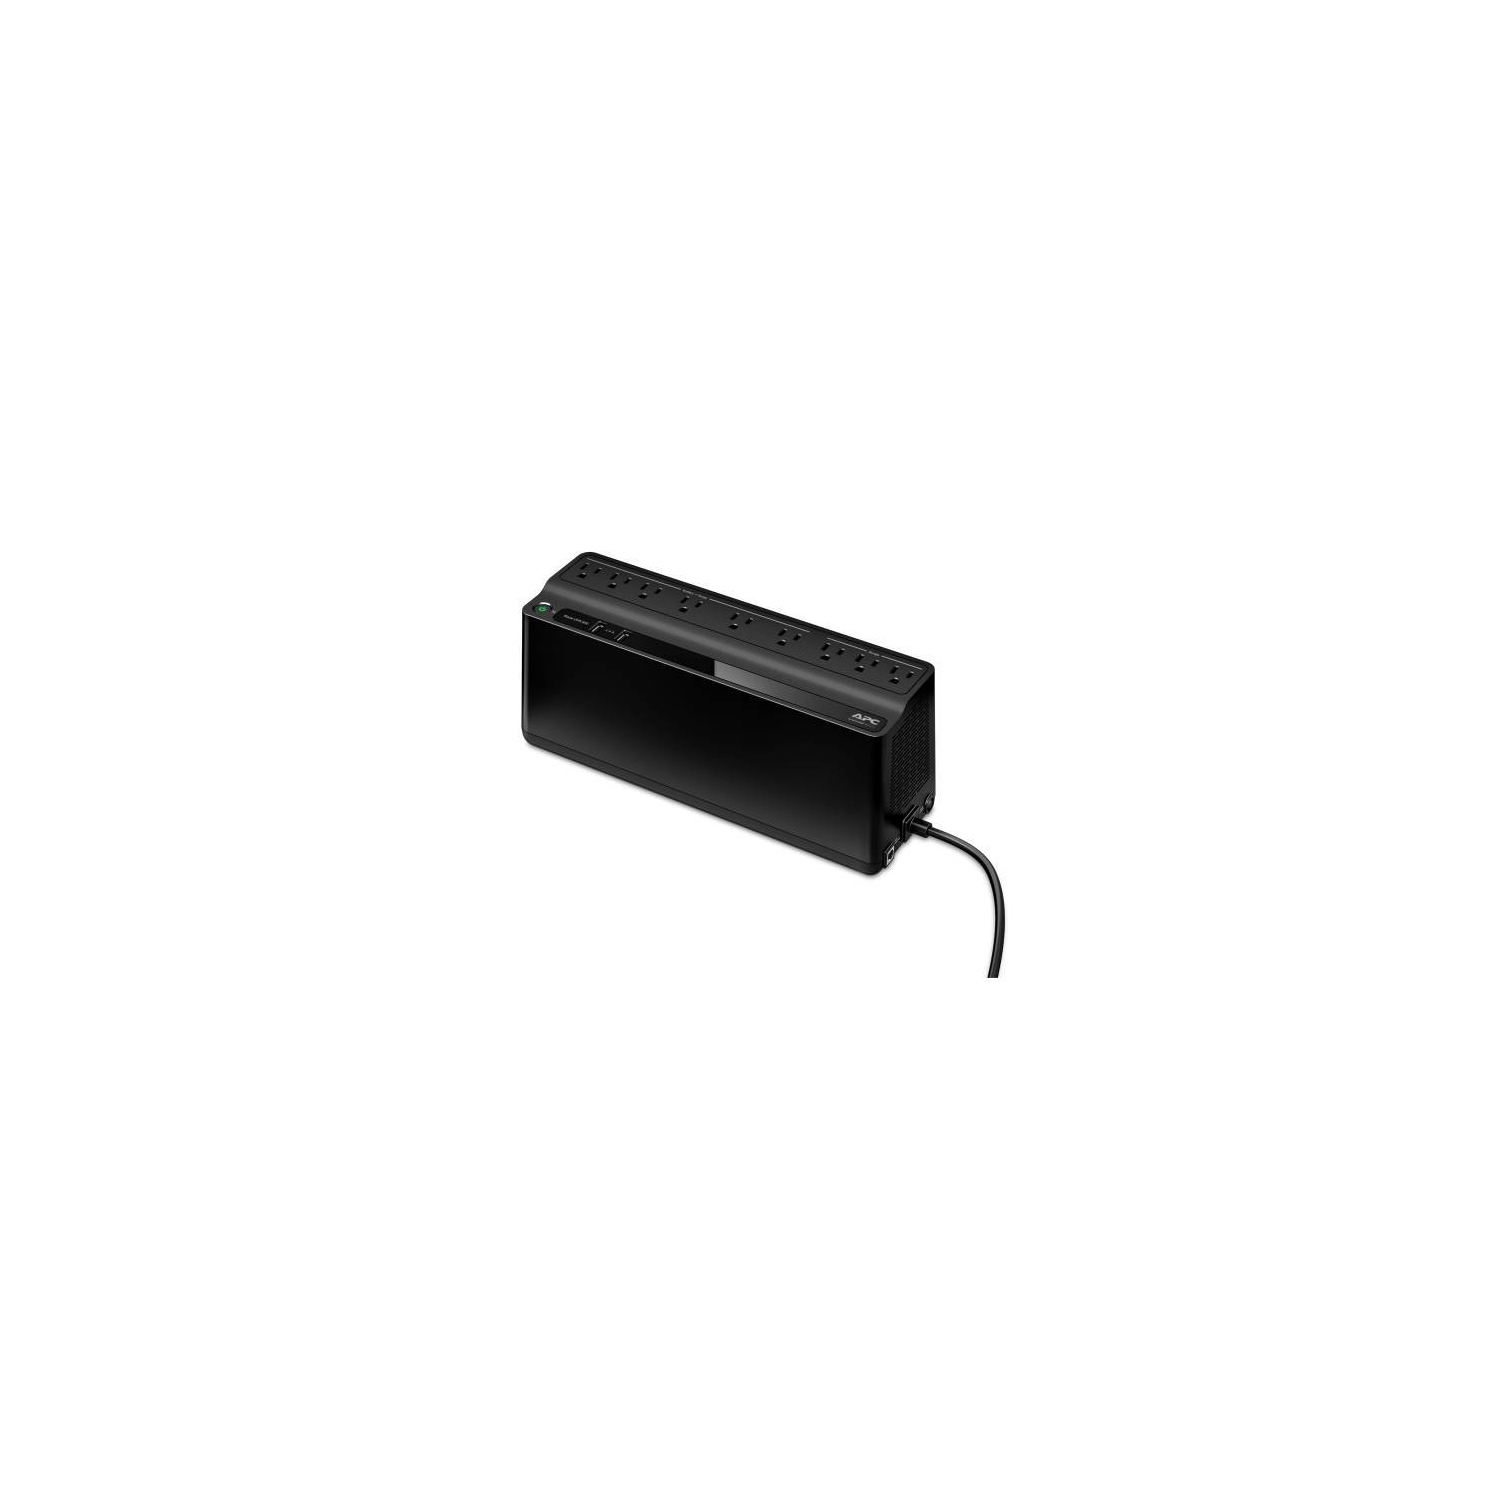 APC by Schneider Electric UPS, 850VA UPS Battery Backup & Surge Protector, BE850G2 Backup Battery, 2 USB Charger Ports, Back-UPS Series Uninterruptible Power Supply, Black